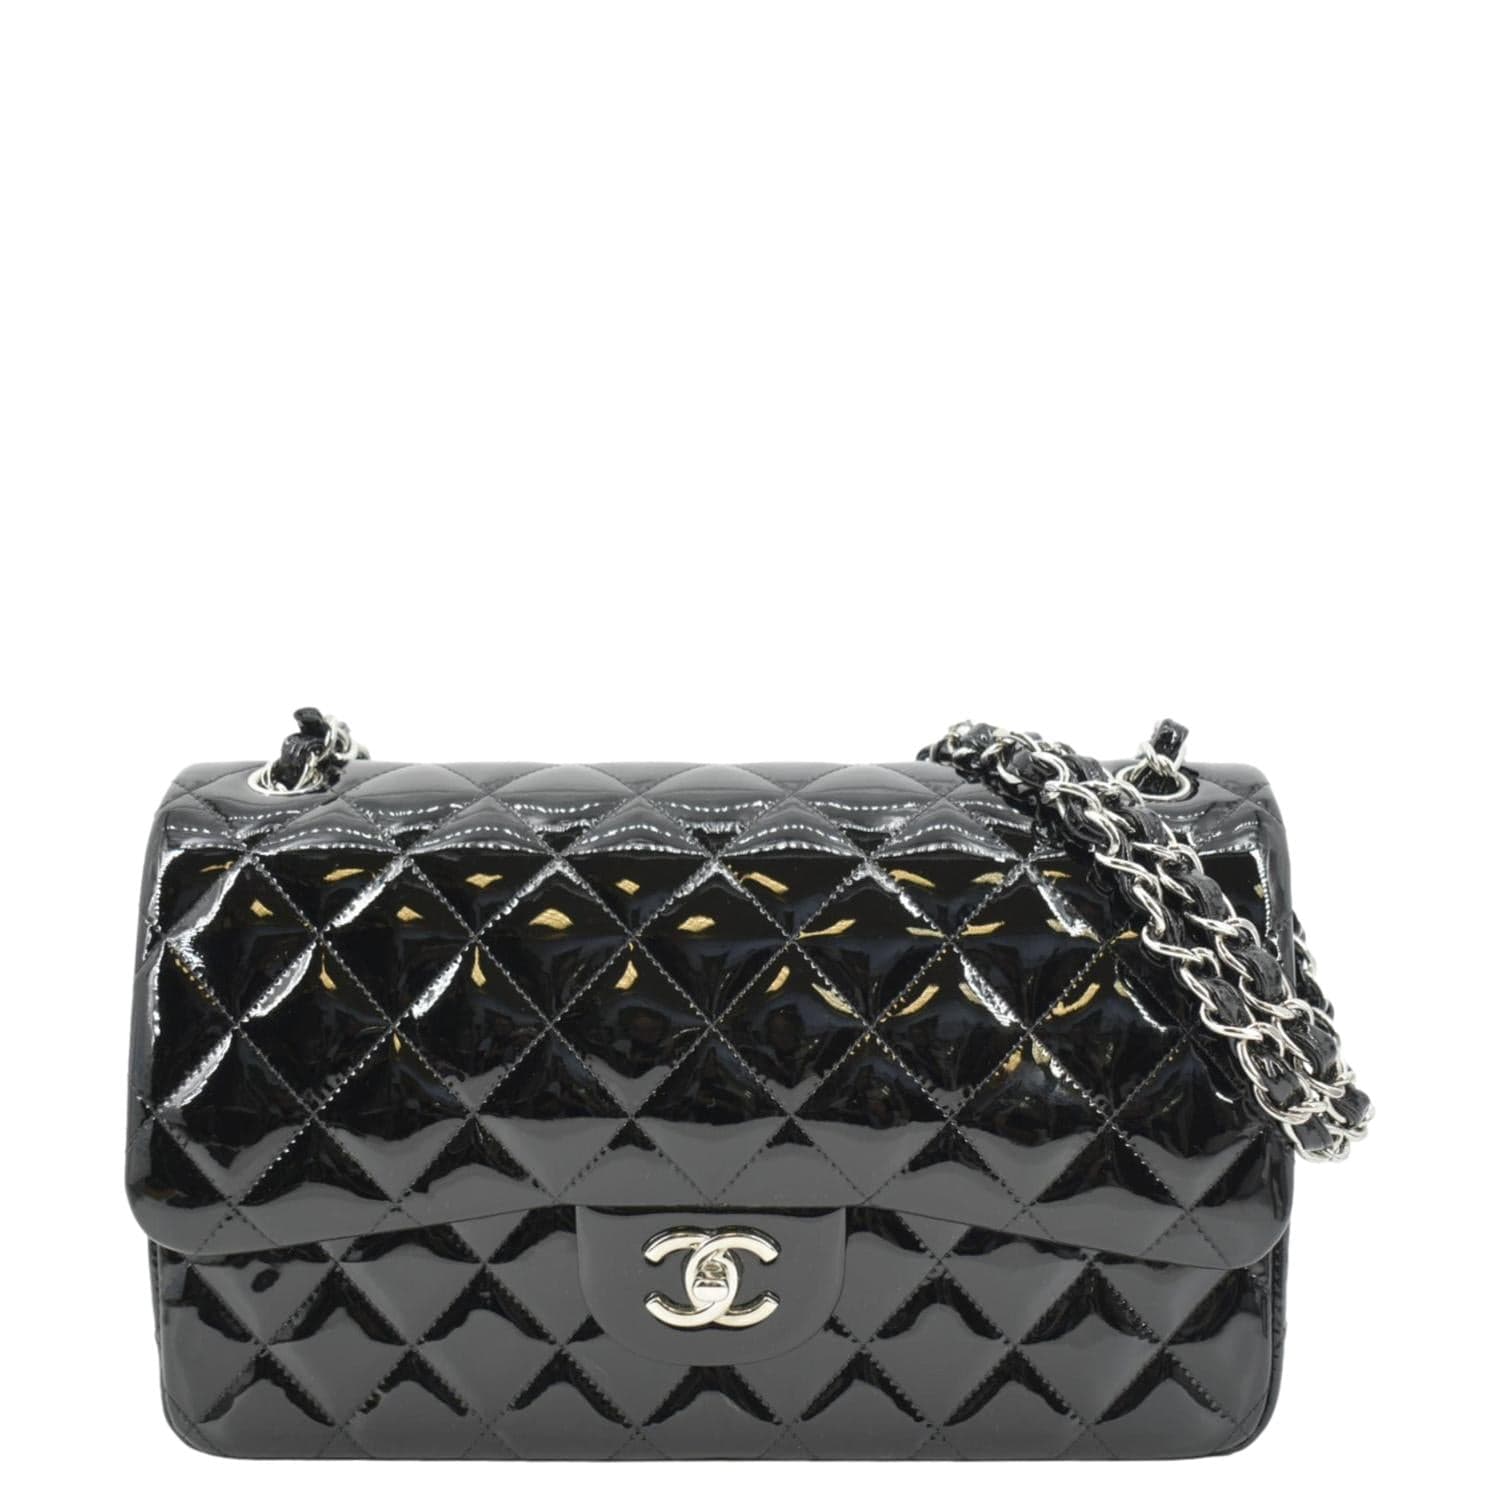 Chanel Classic Medium Double Flap Patent Leather Shoulder Bag